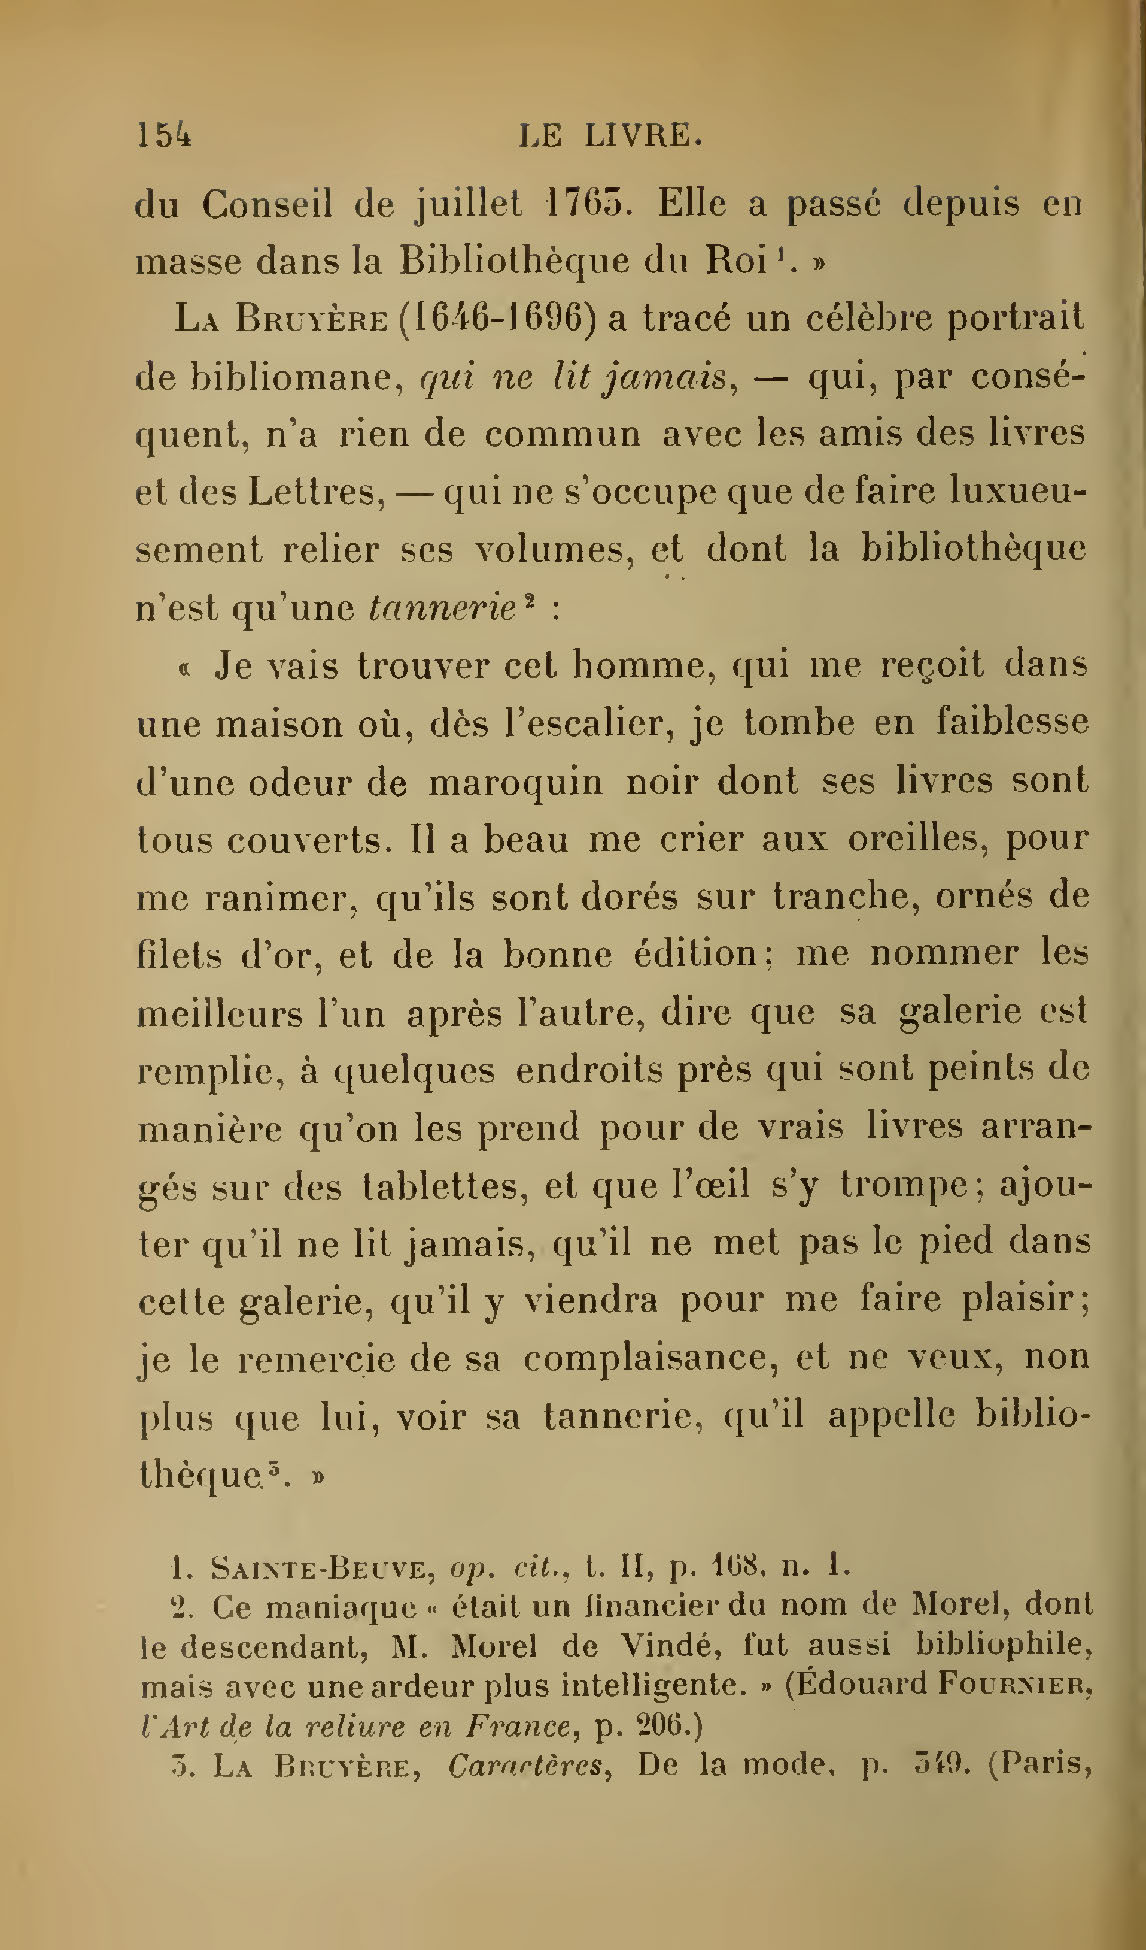 Albert Cim, Le Livre, t. I, p. 154.